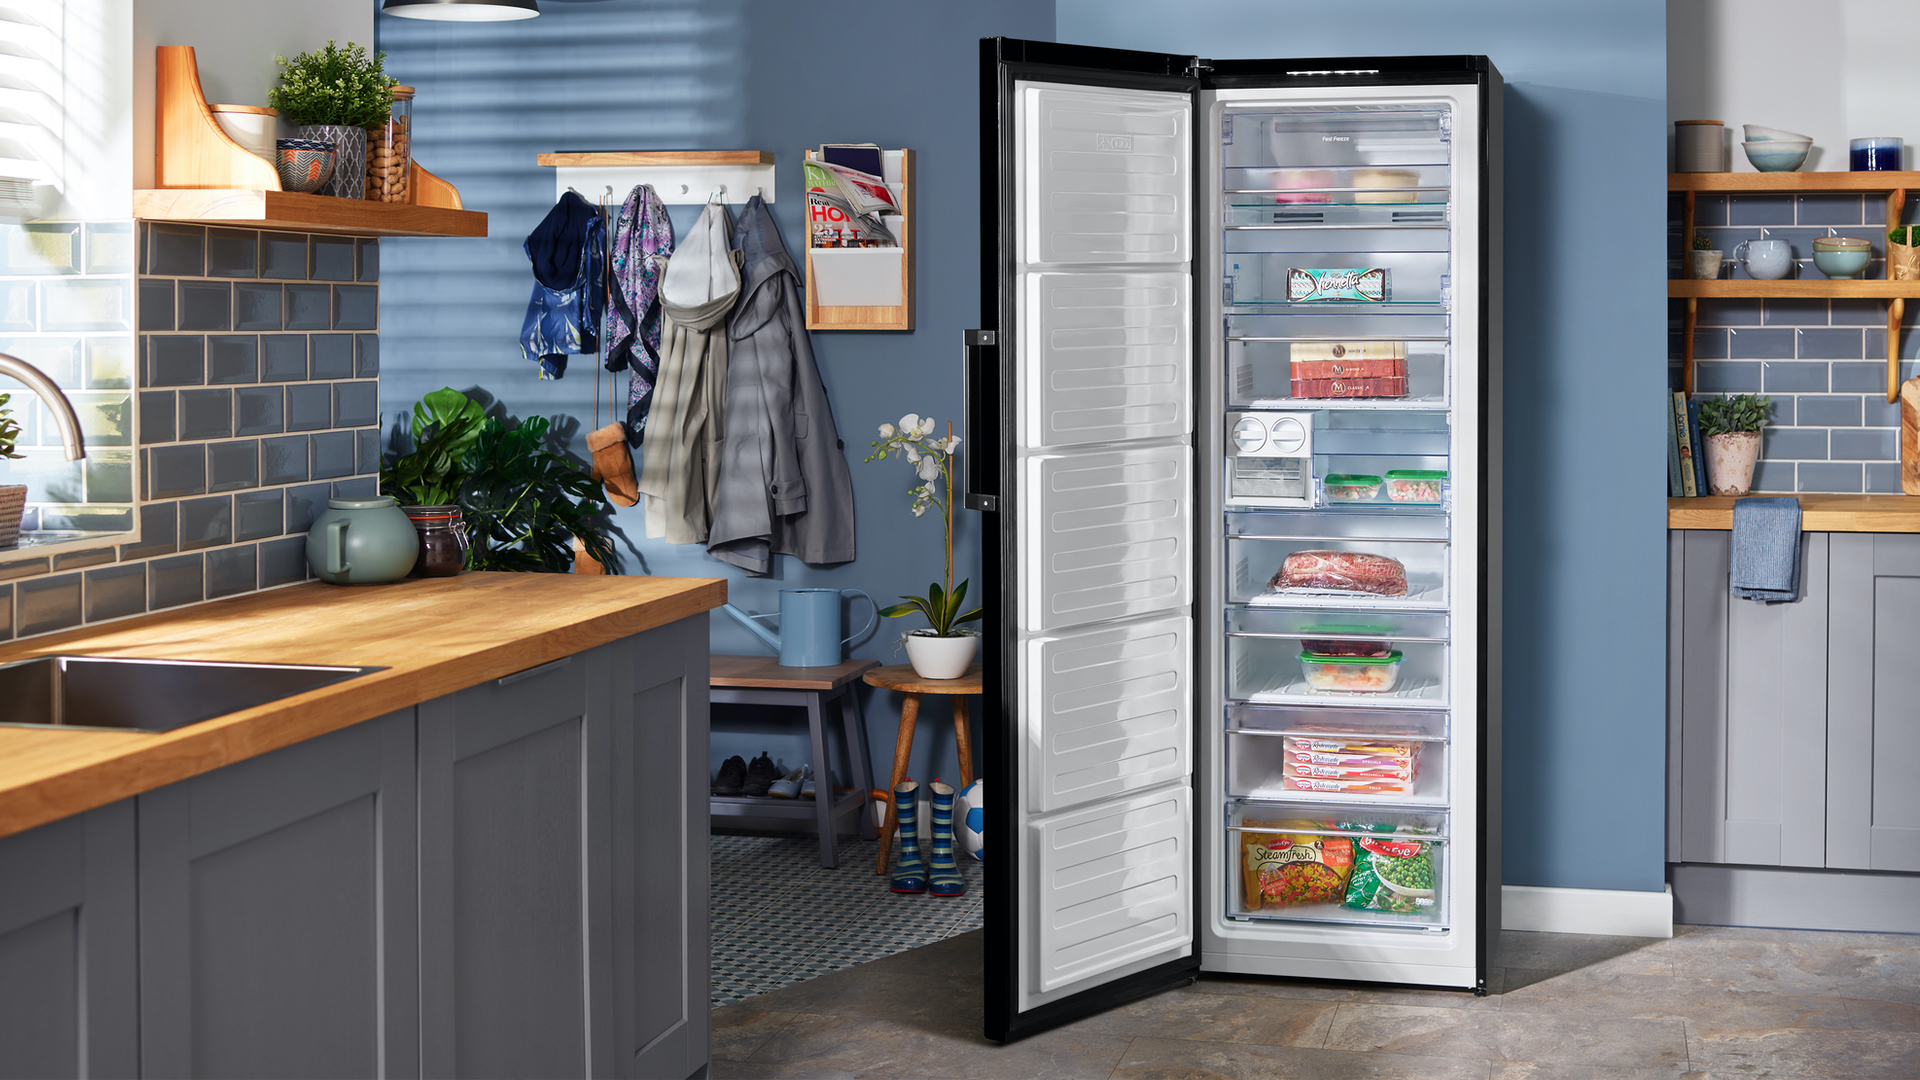 The Advantages of Under Counter Freezer - Ceviant